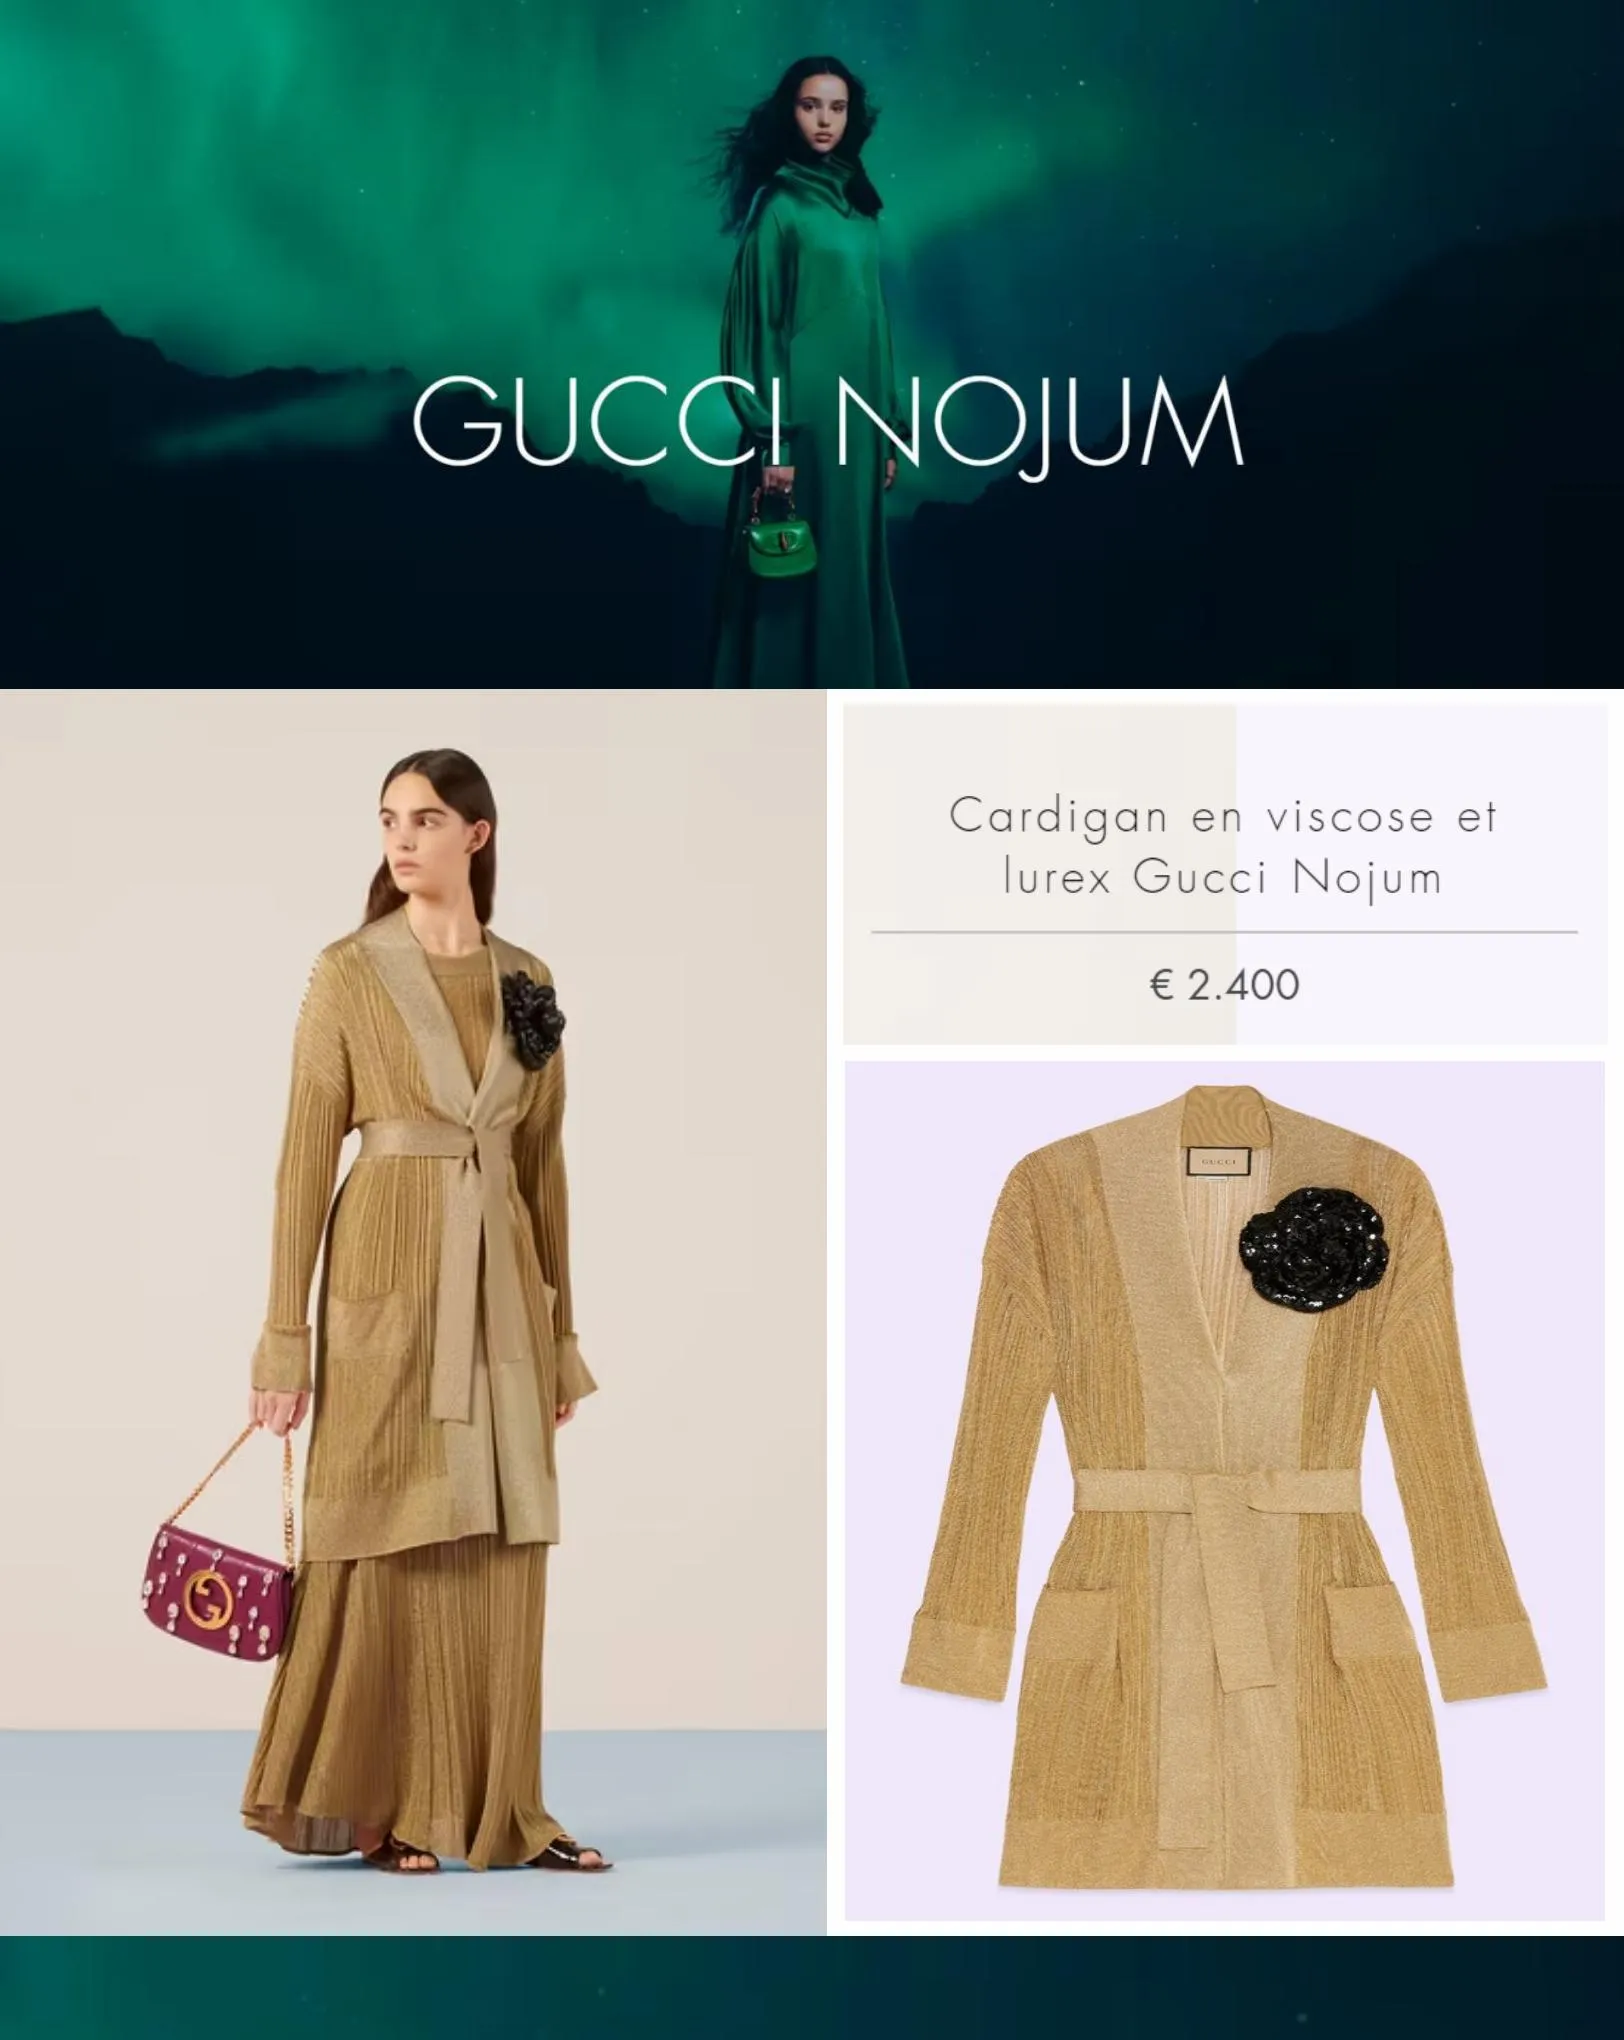 Catalogue Gucci Nojum, page 00001